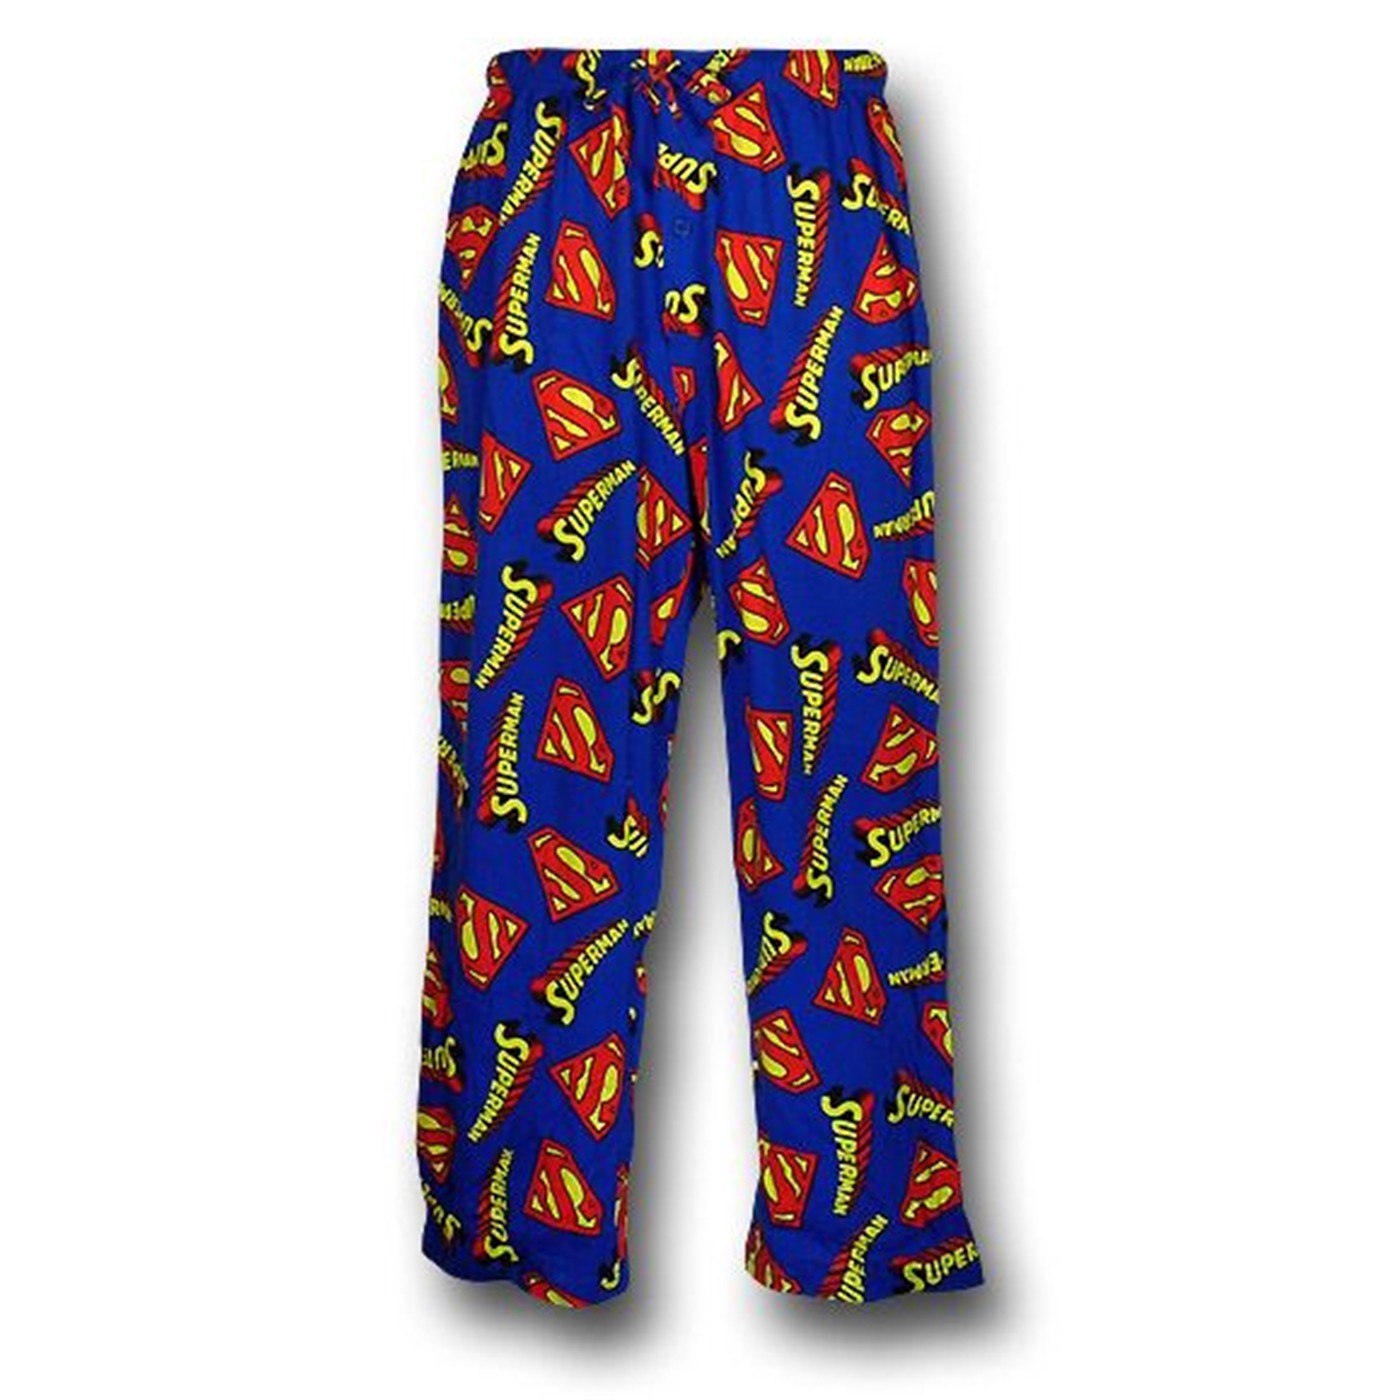 Superman Symbol T-Shirt and Pants Sleep Set